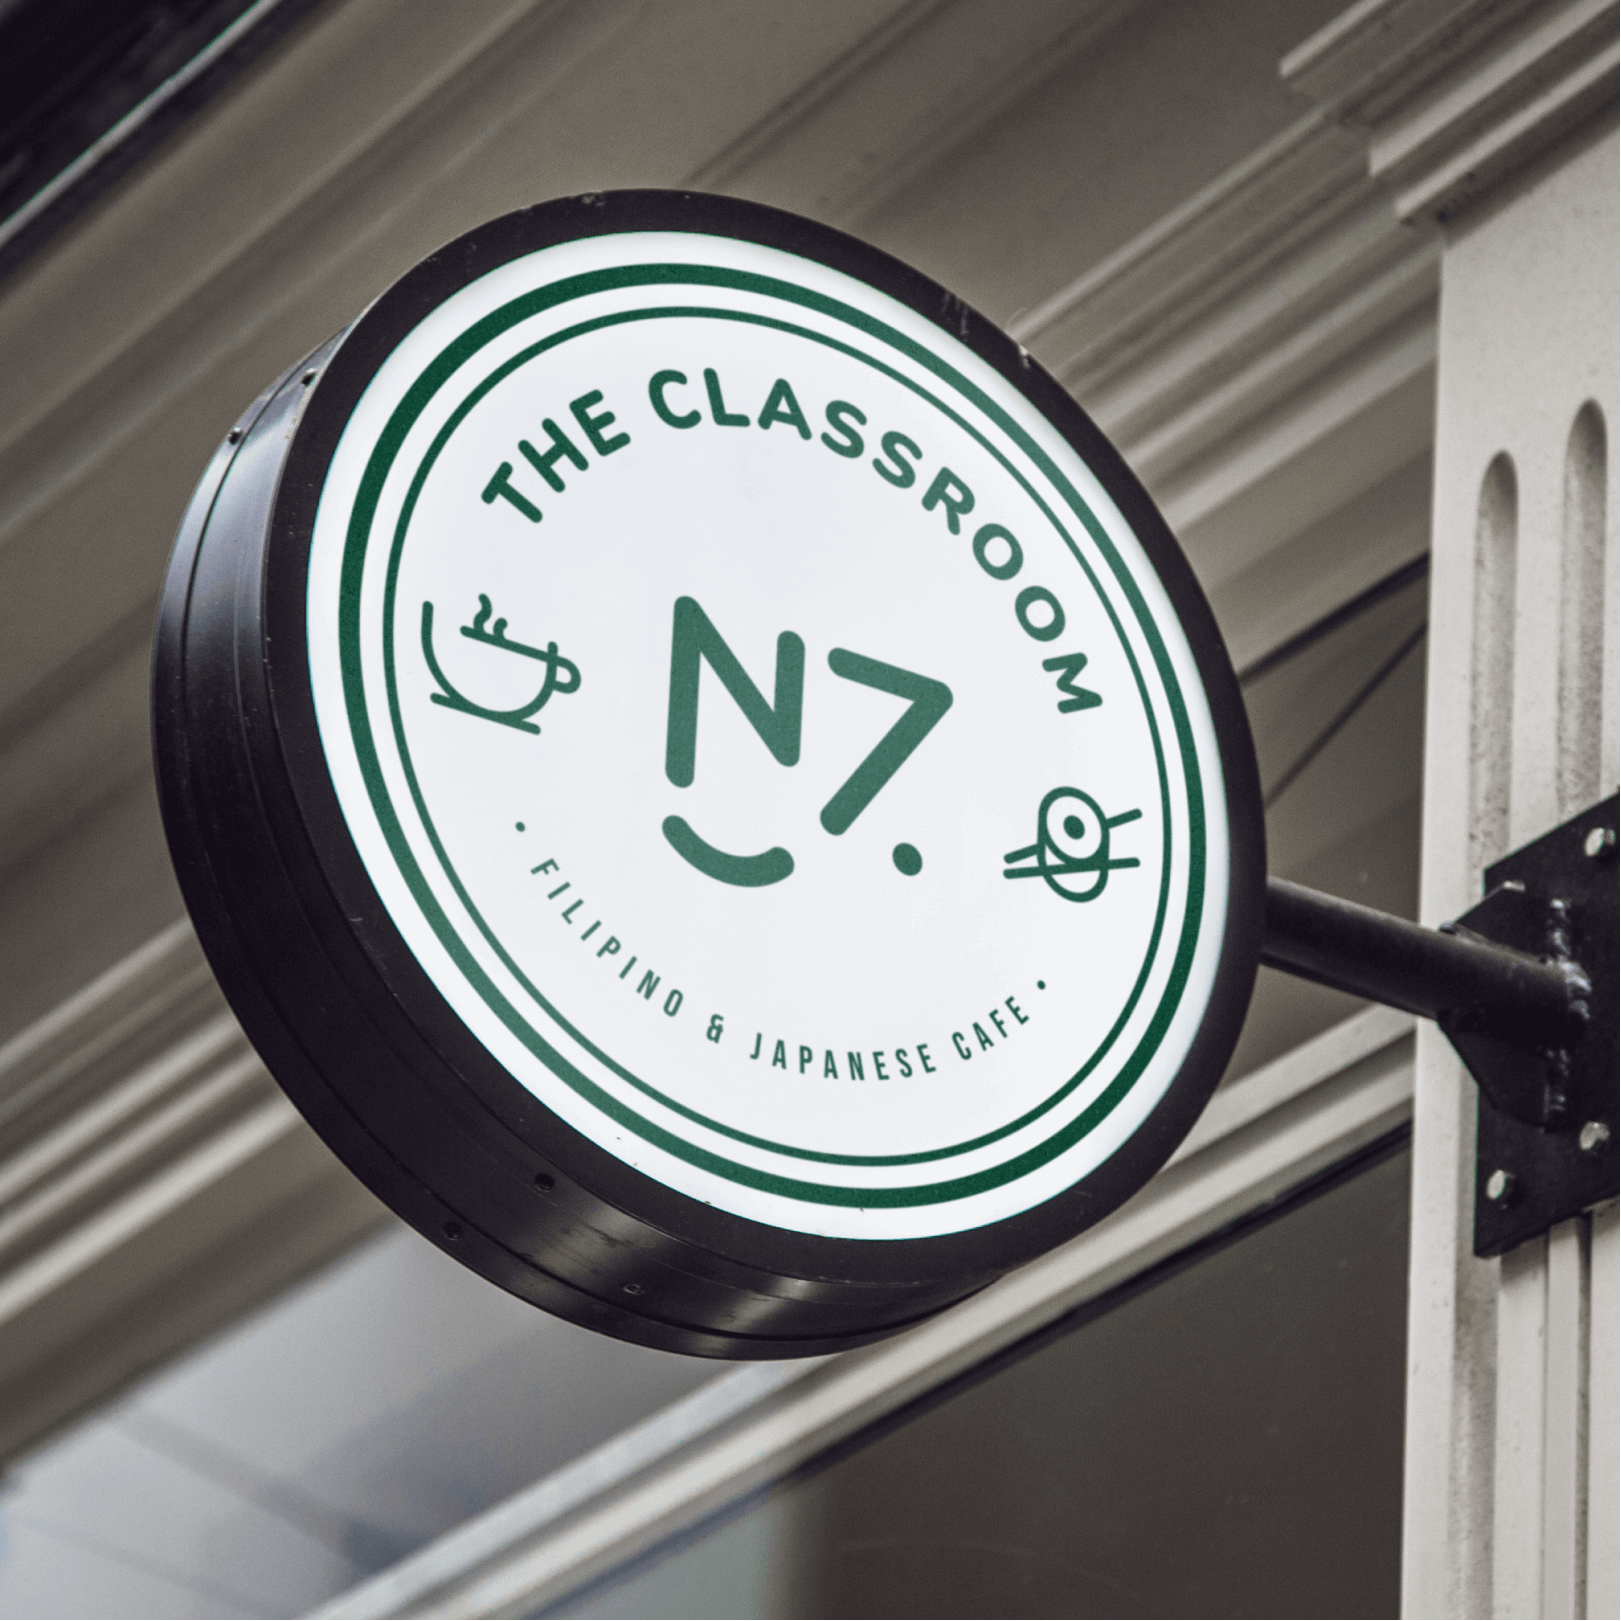 classroom-n7-sign